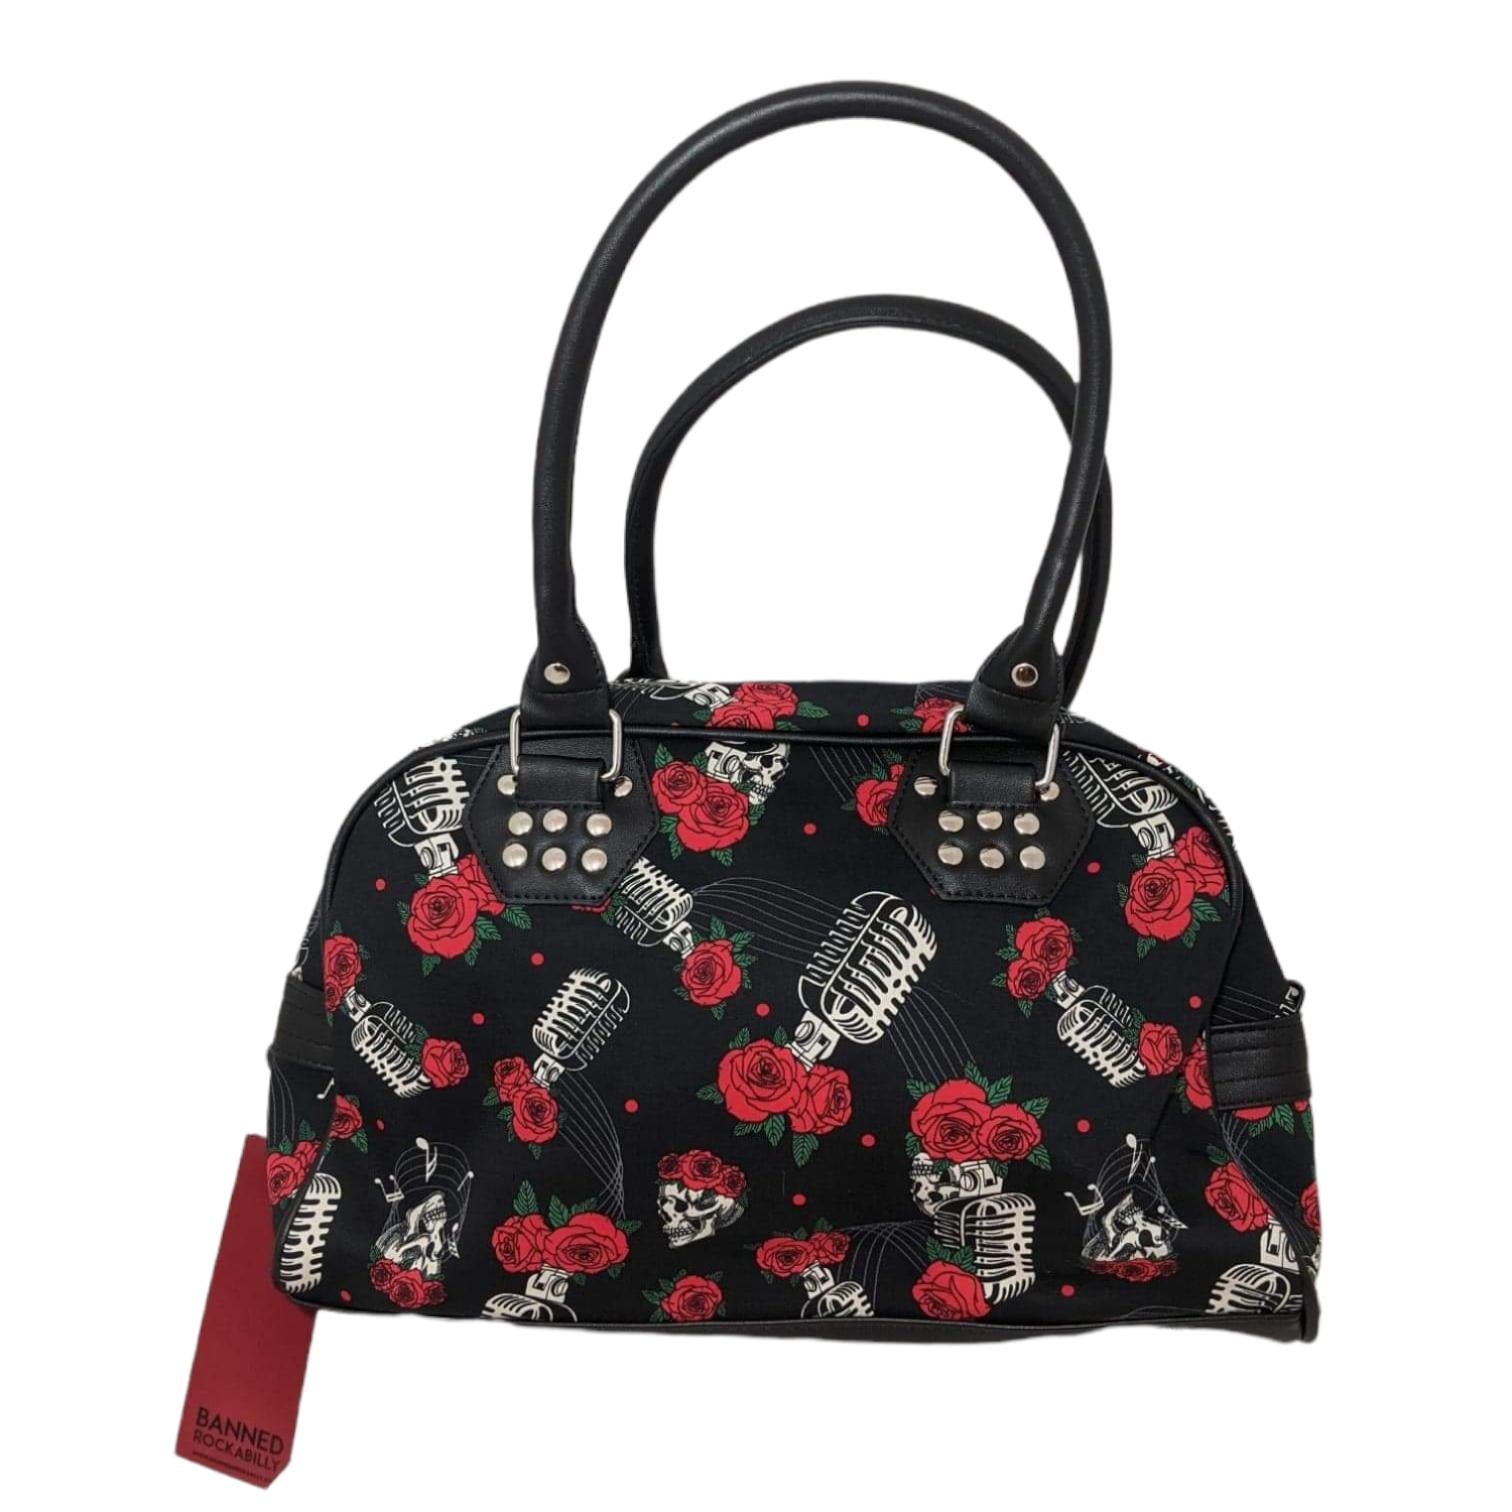 Romantically Rebellious Handbags : margesherwood